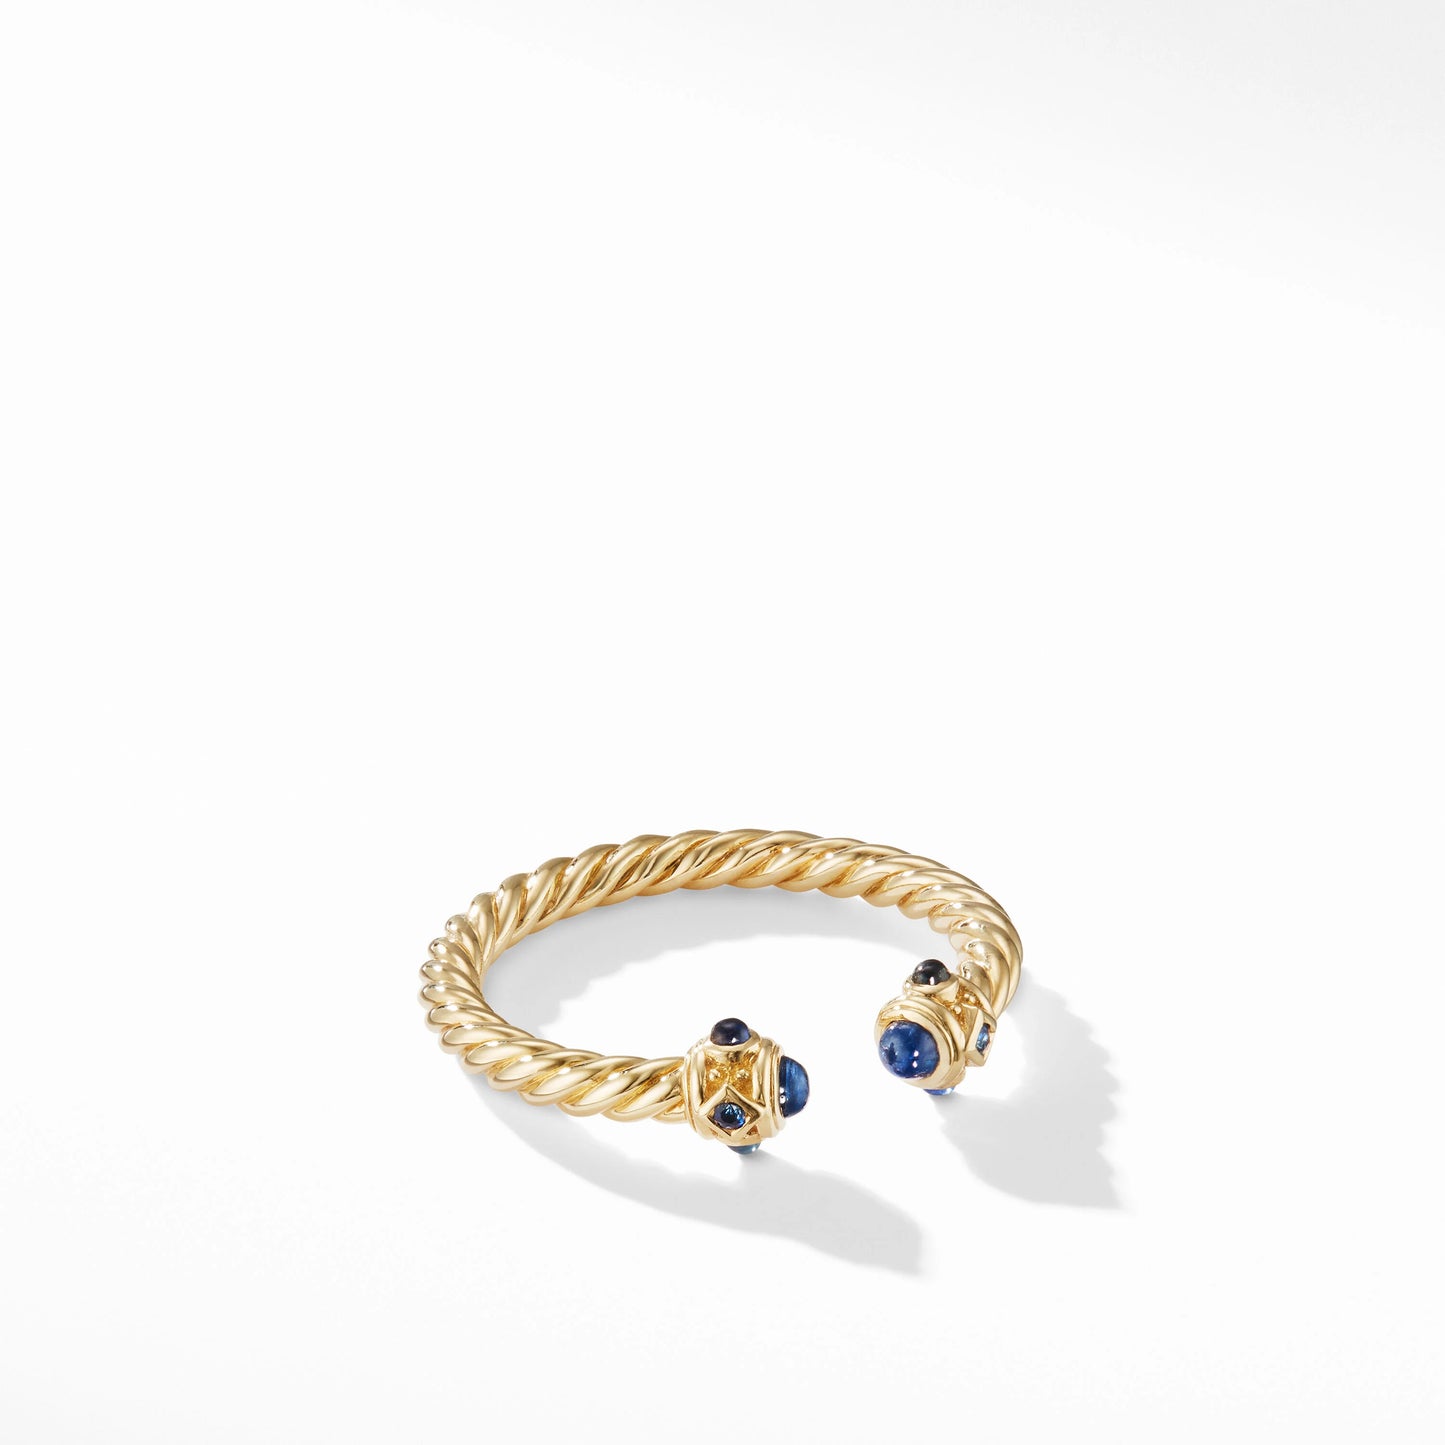 Preowned David Yurman Renaissance Sapphire Ring